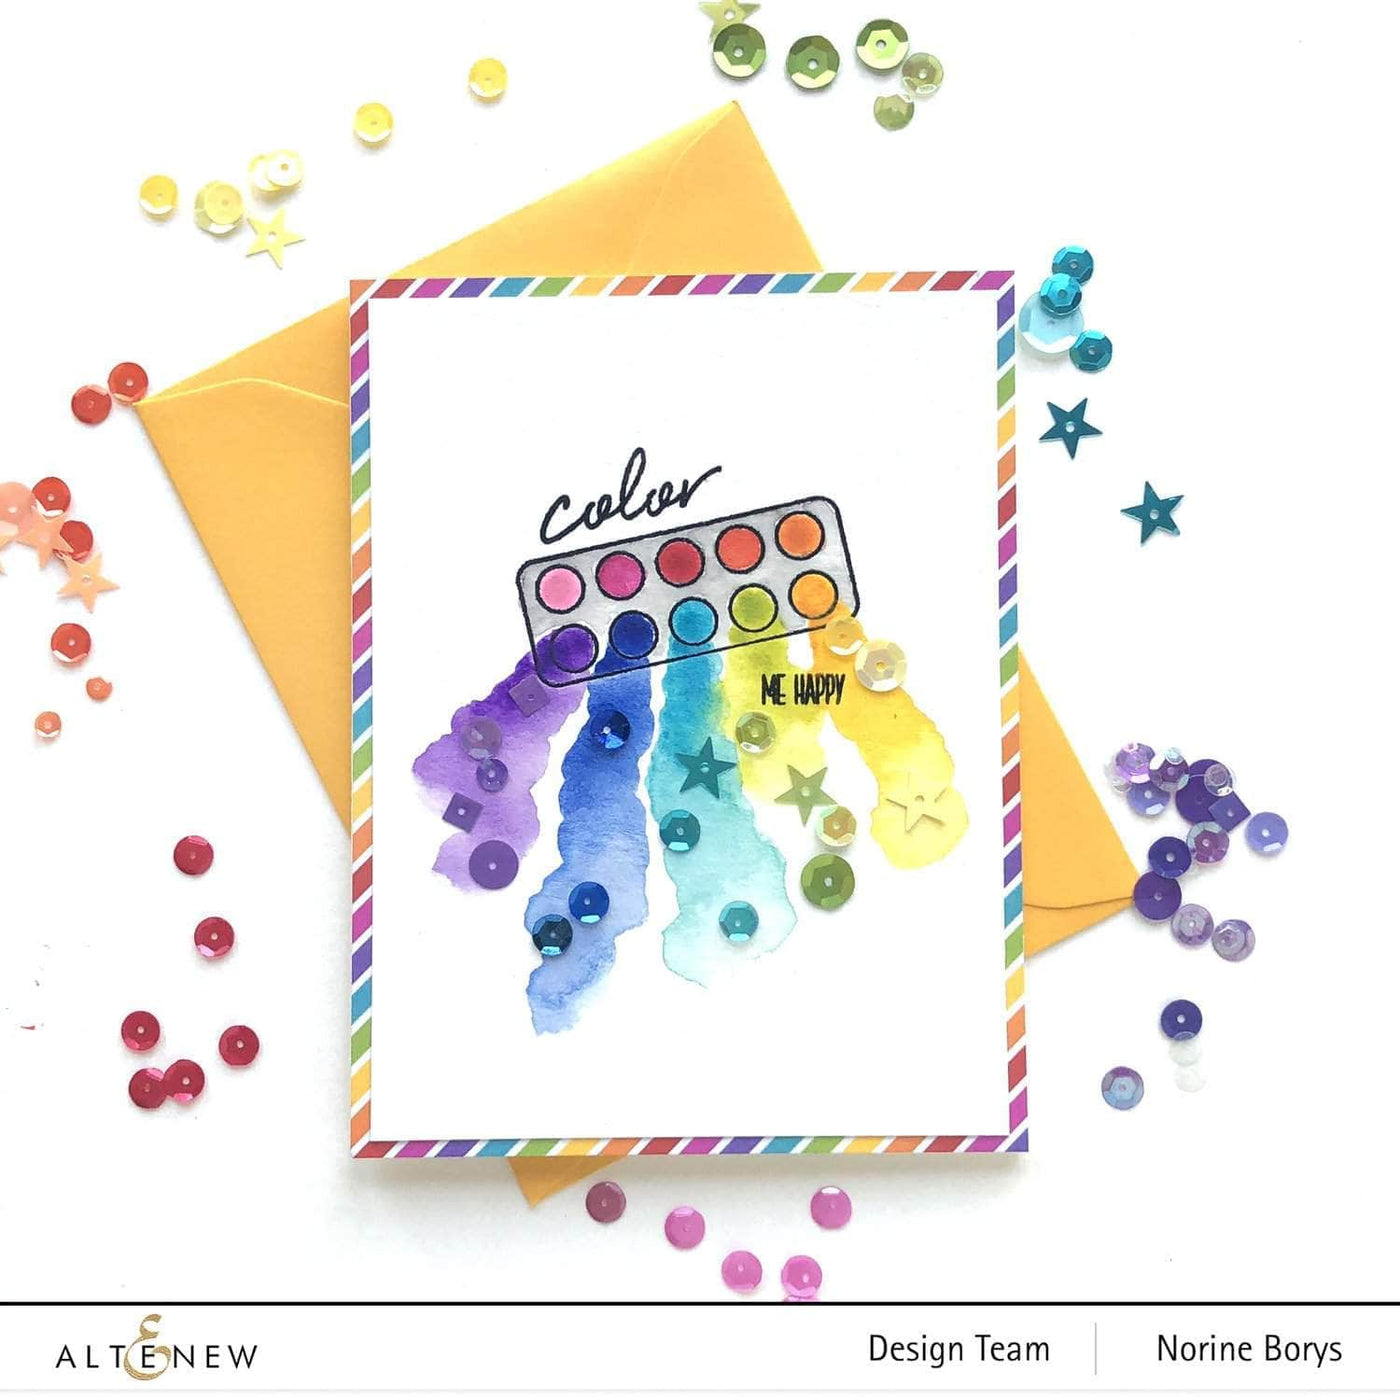 Altenew - Clear Stamps & Die bundle - Mini Delight: Mini Paintbox Stamp &  Die Set